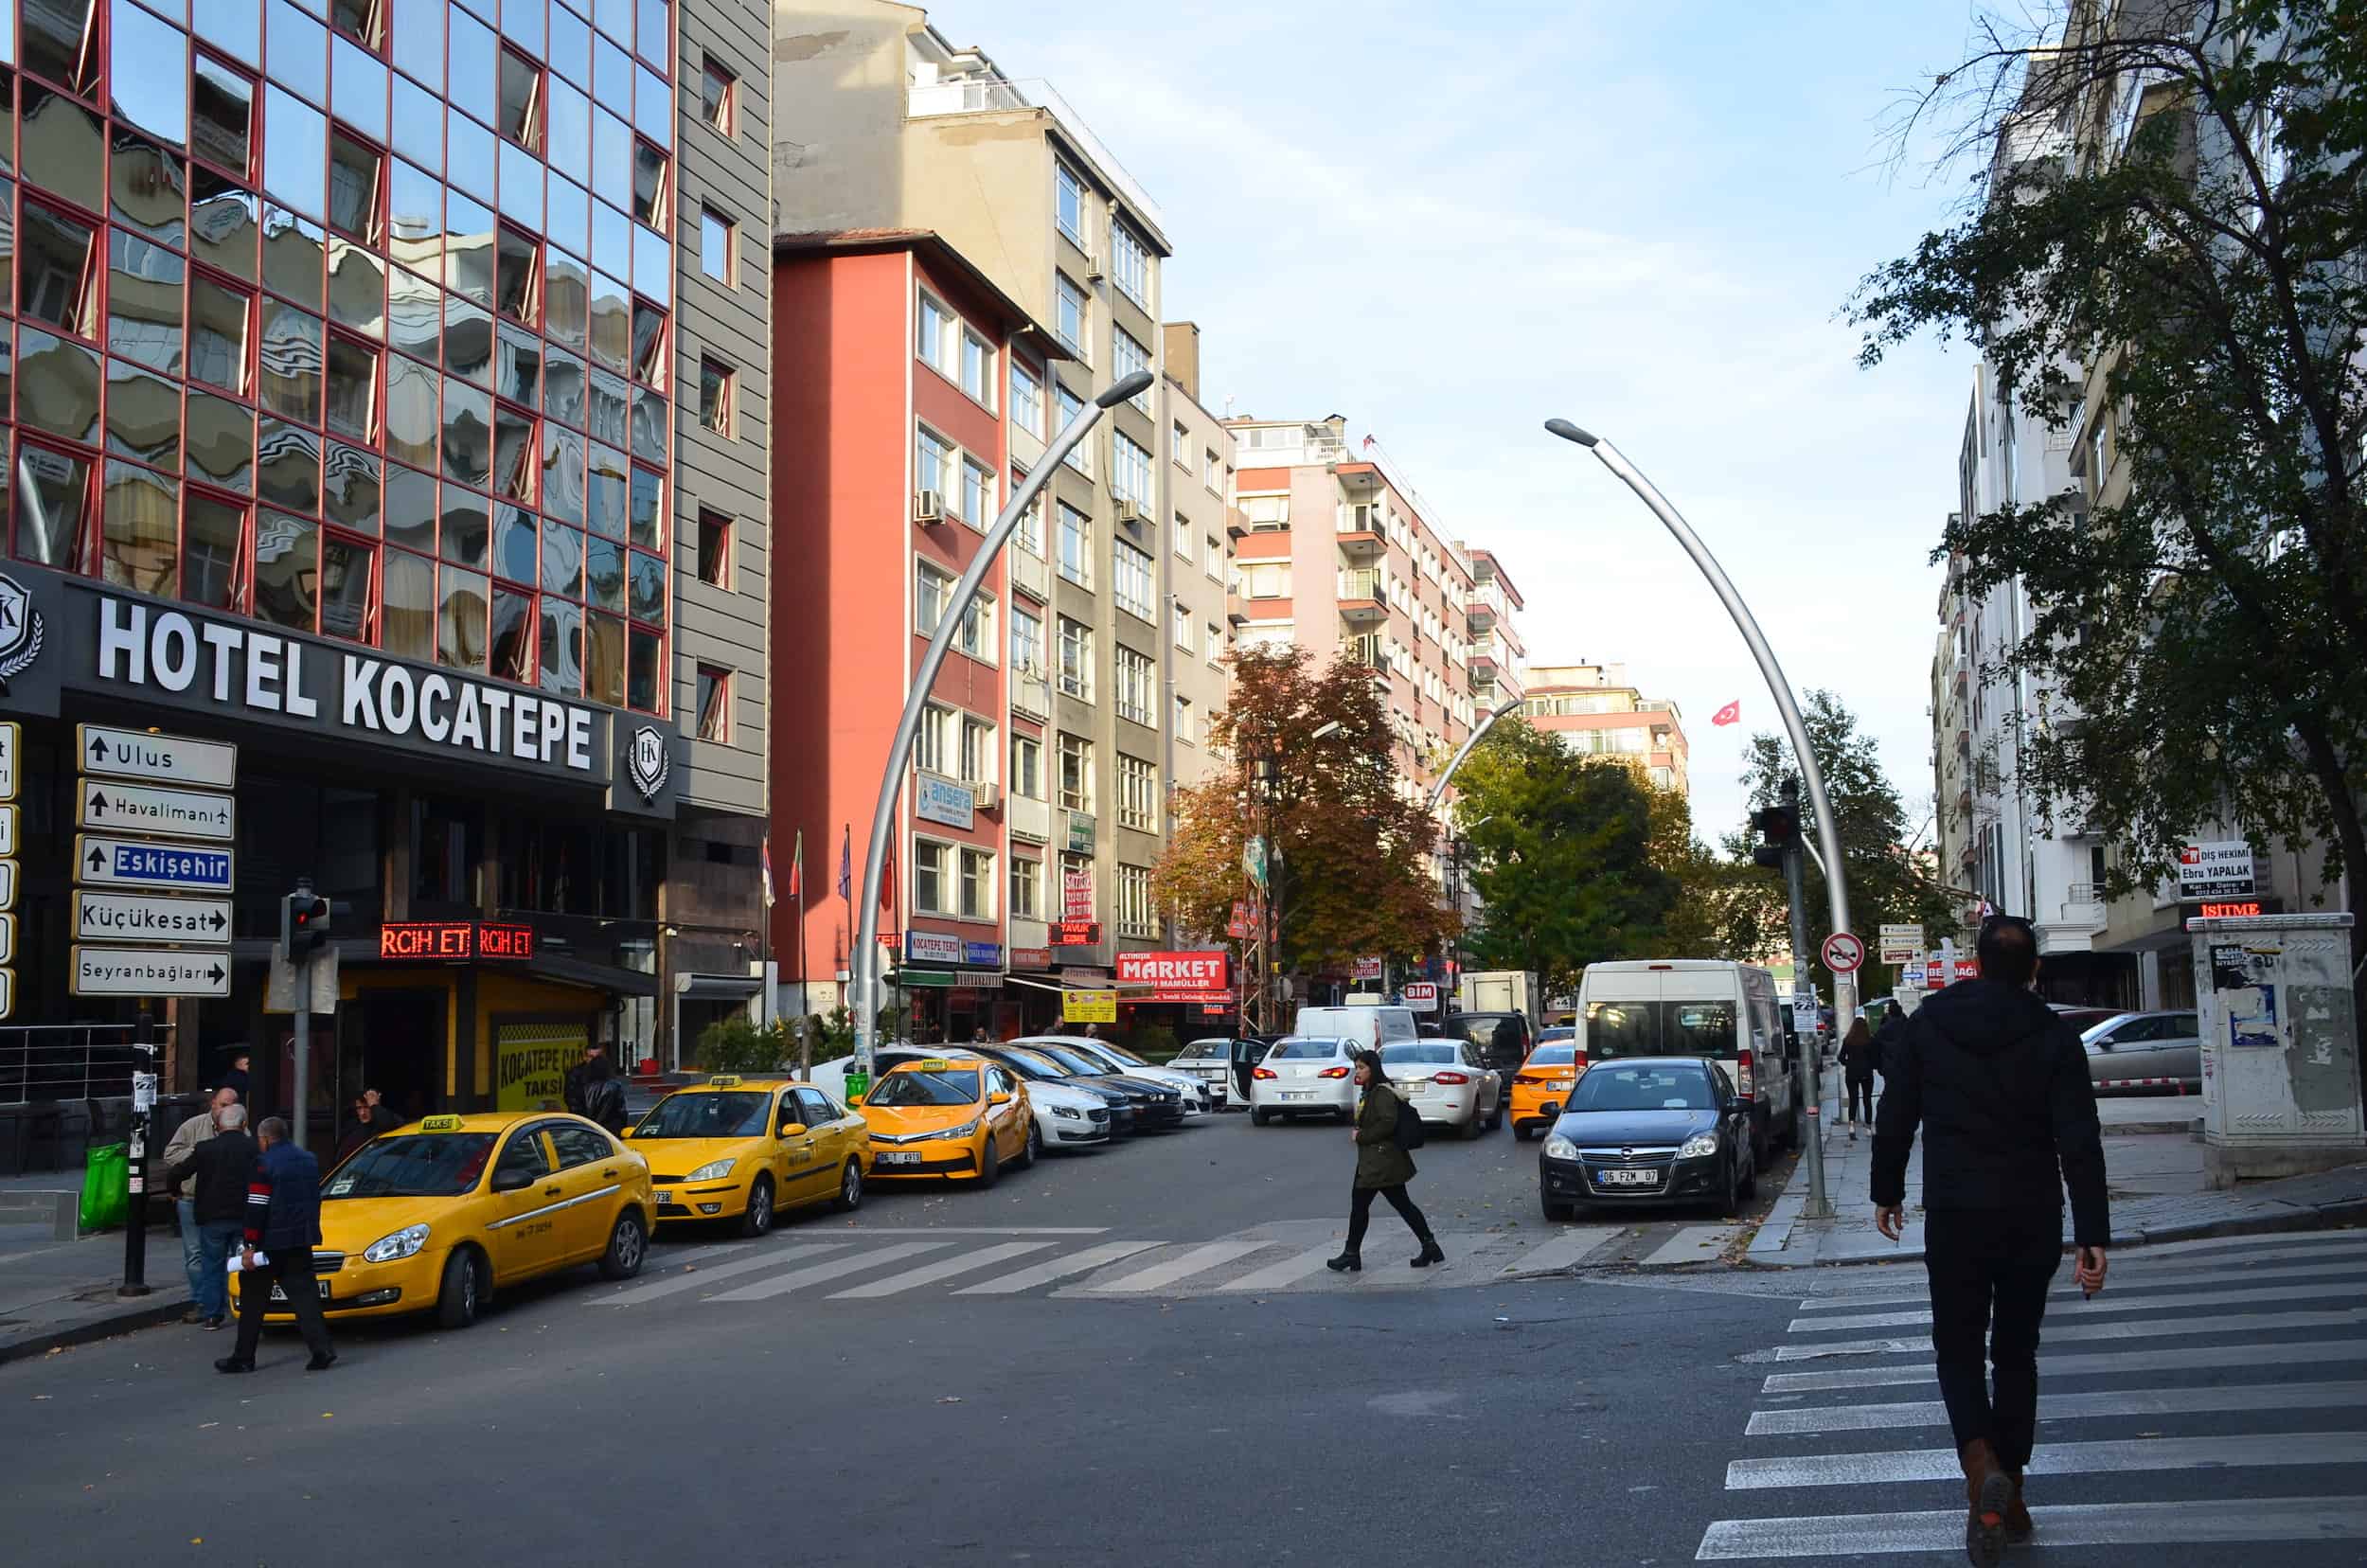 Meşrutiyet Avenue in Kızılay, Ankara, Turkey